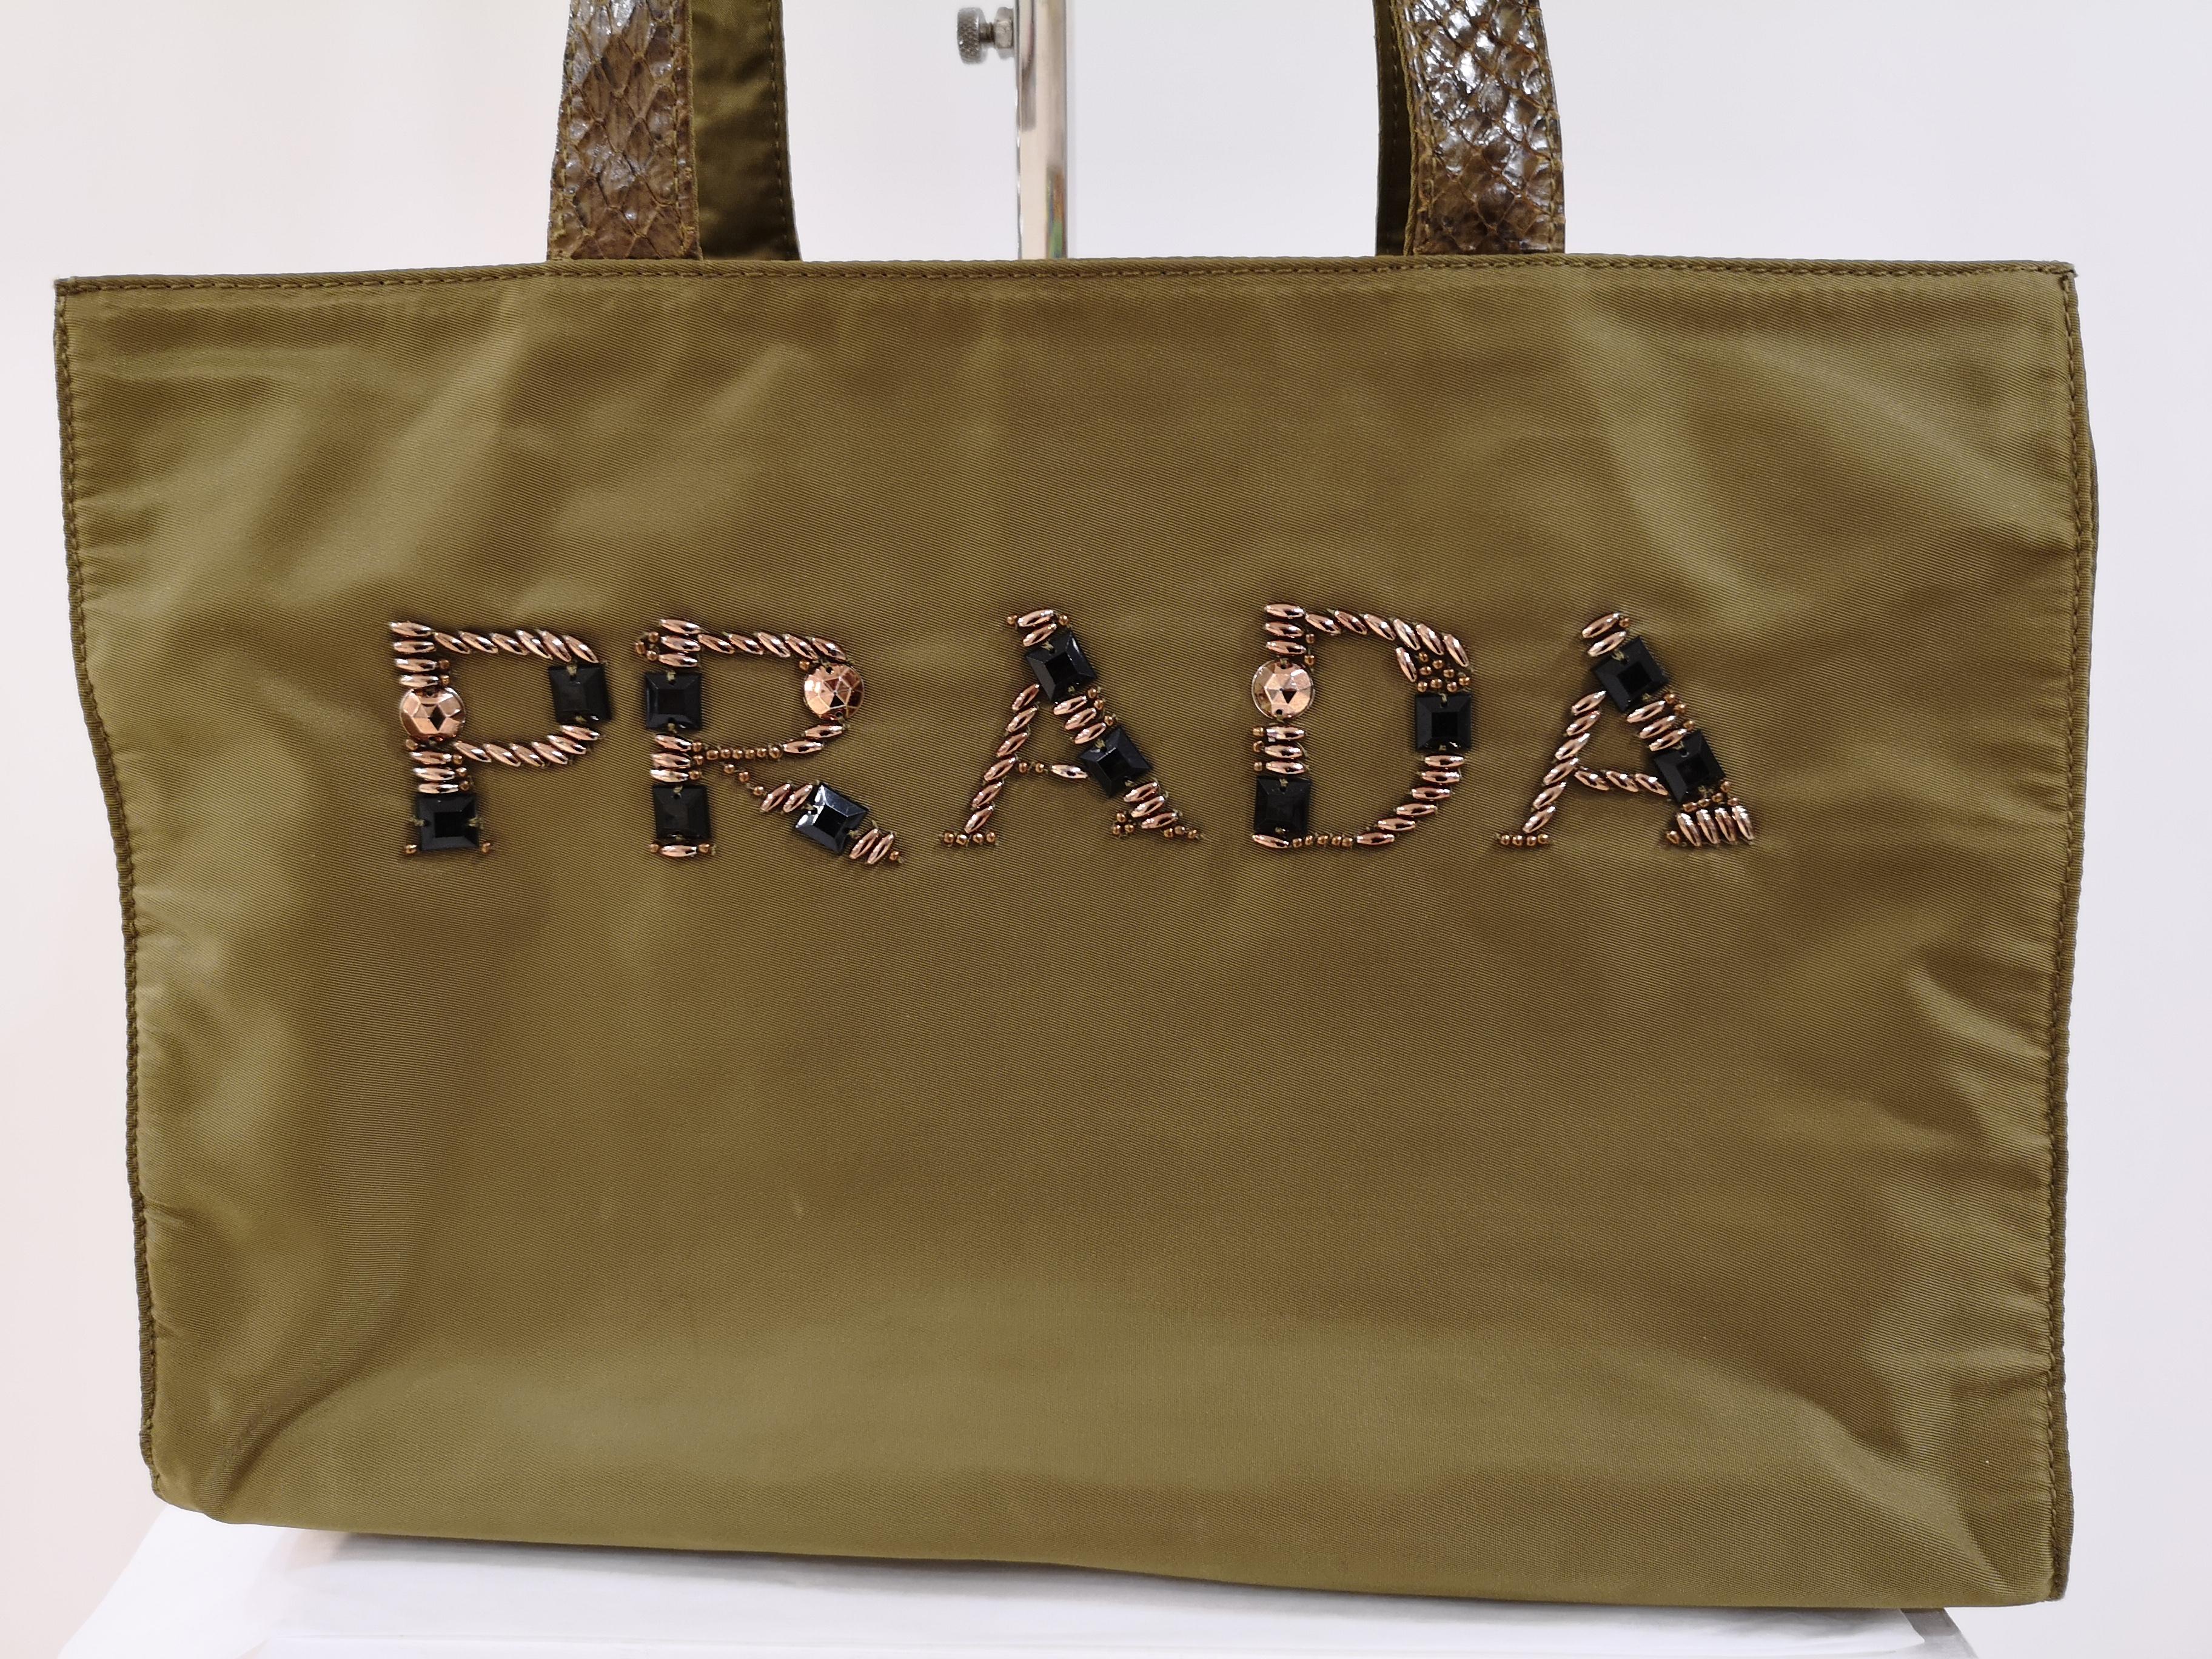 Prada green swarovski logo shoulderbag / python skin leather handle
totally made in italy 
measurements:  34 * 23 cm 12 cm depth